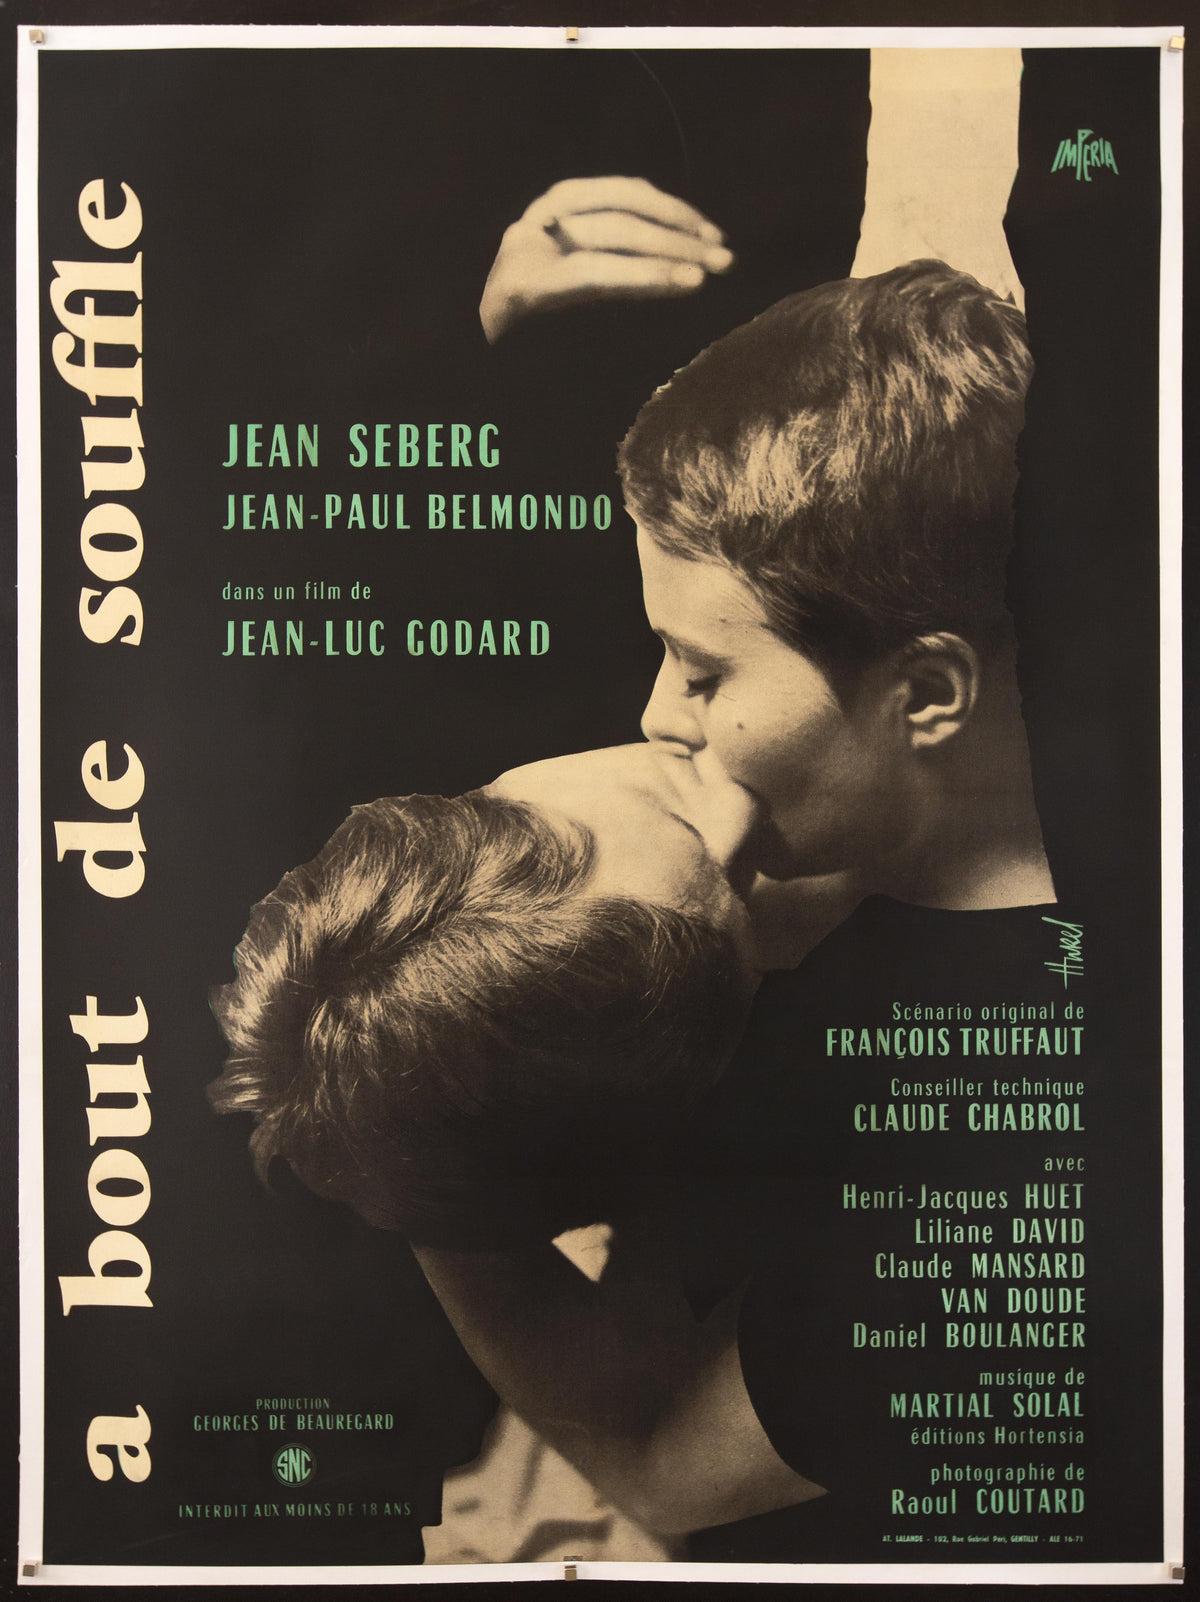 Breathless (A Bout De Souffle) French 1 Panel (47x63) Original Vintage Movie Poster